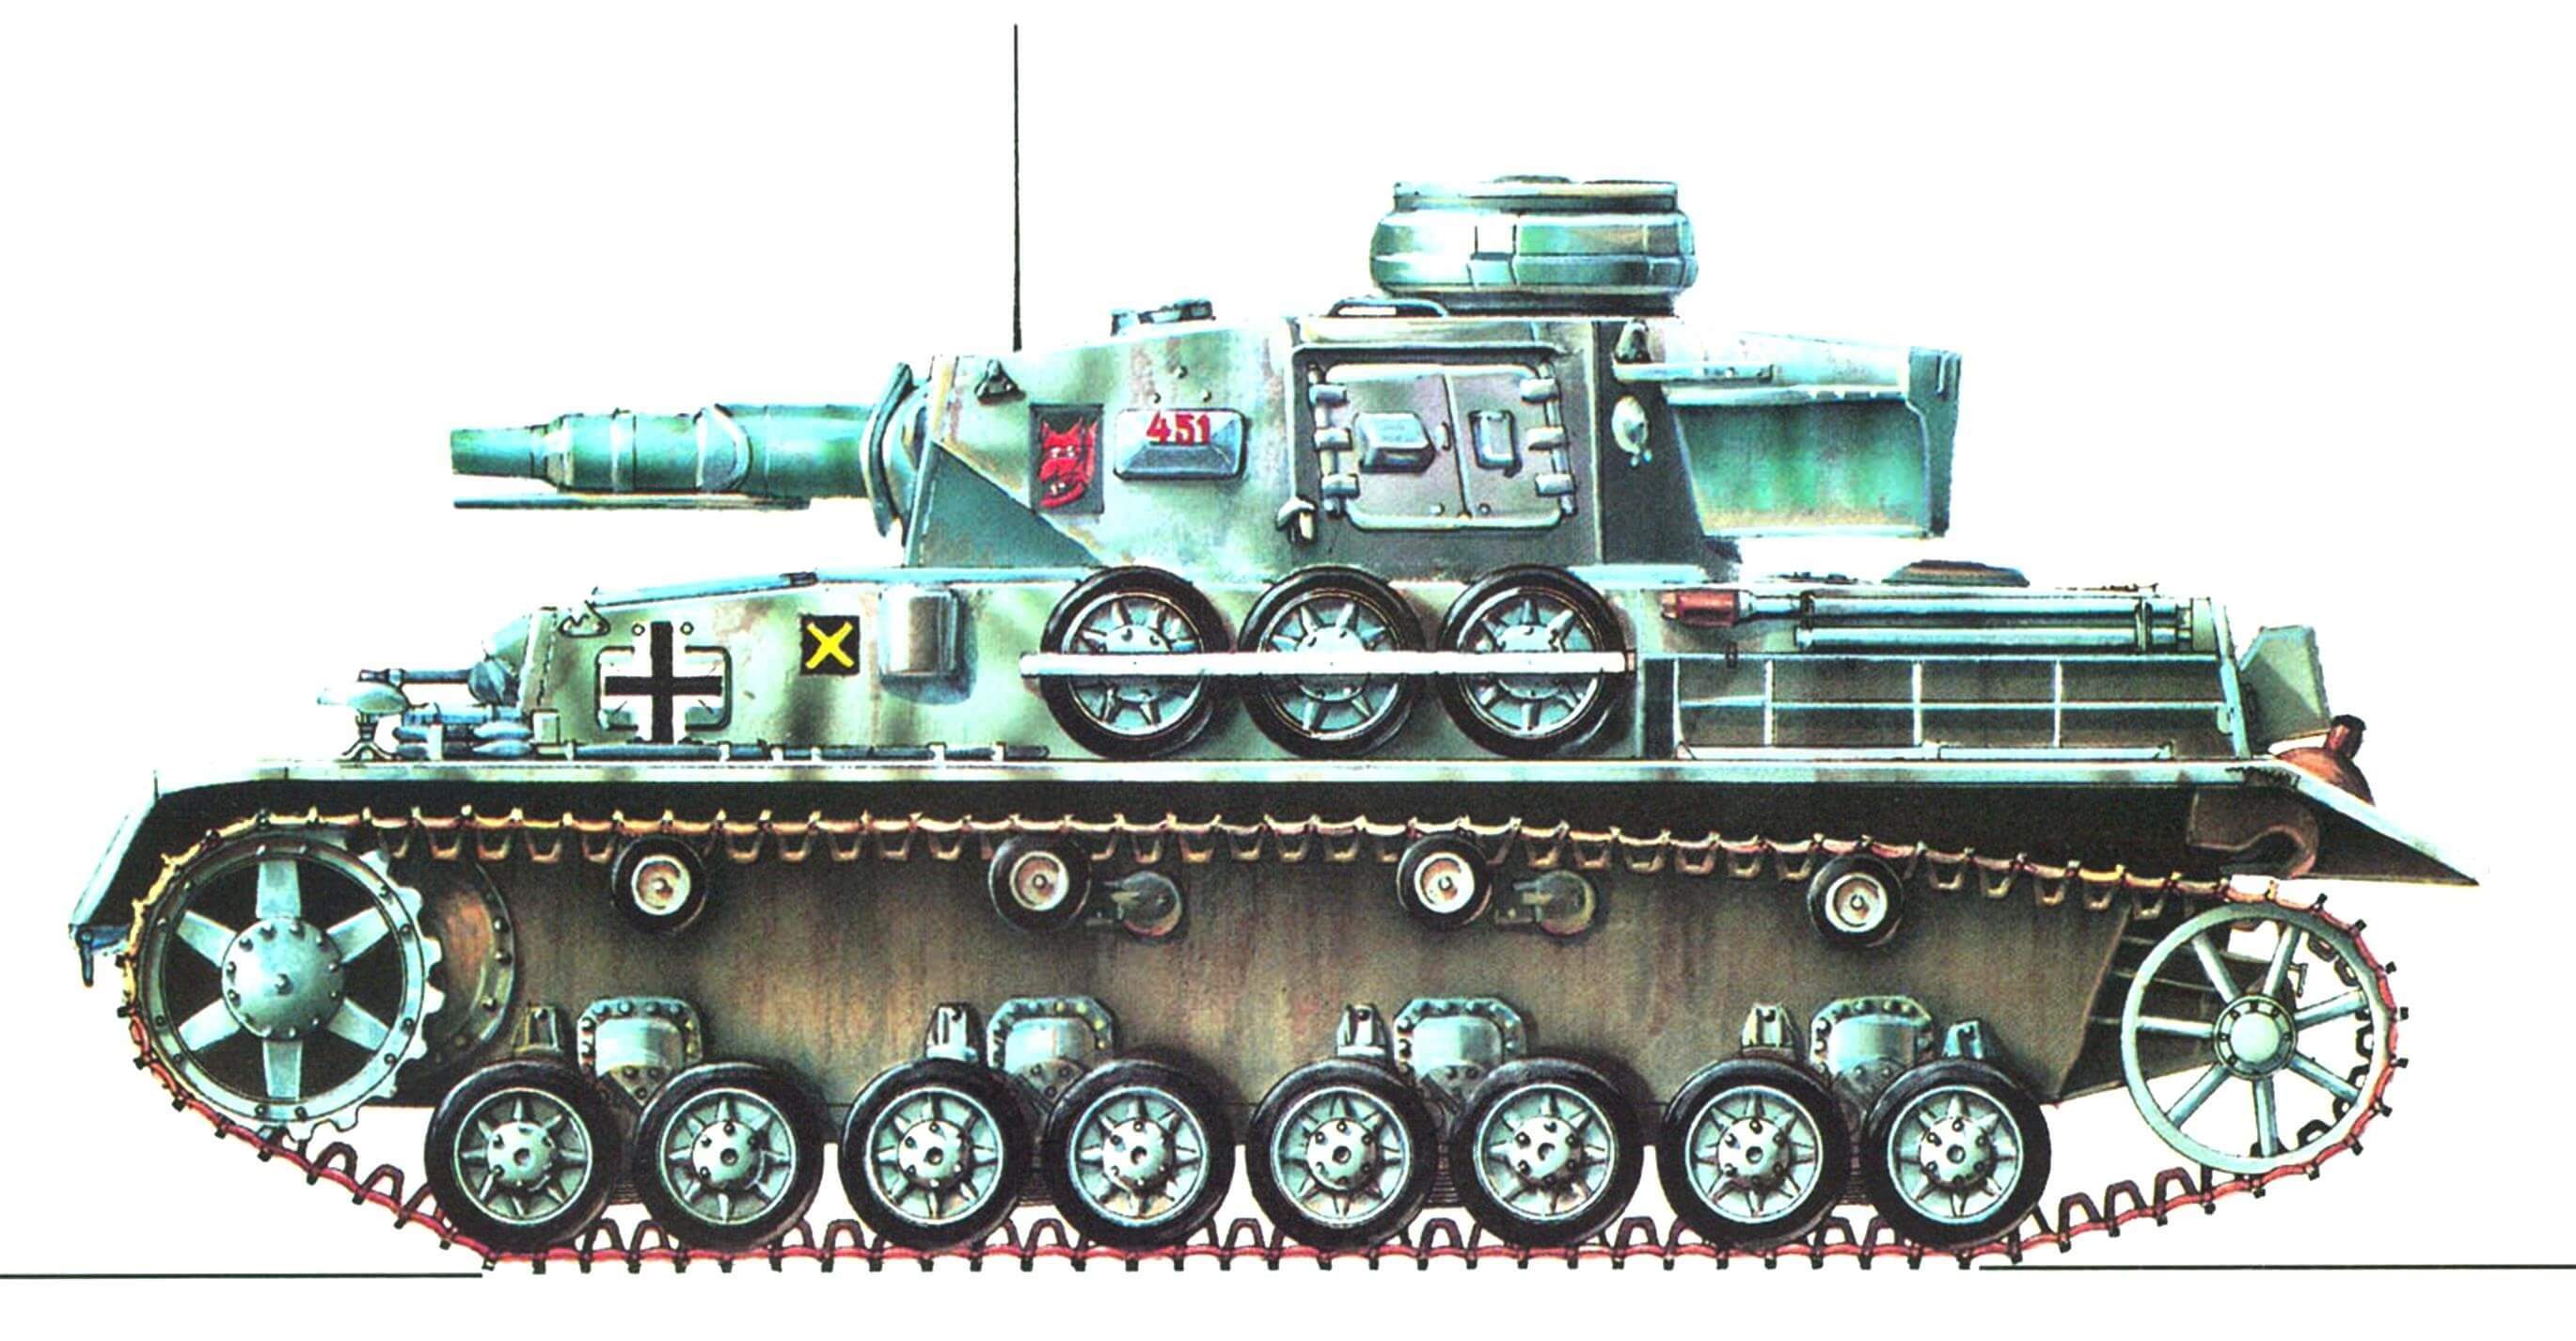 Pz.Kpfw.IV Ausf.F1. 5-я танковая дивизия (5.Panzer Divizion), Восточный фронт, 1941-1942 год.